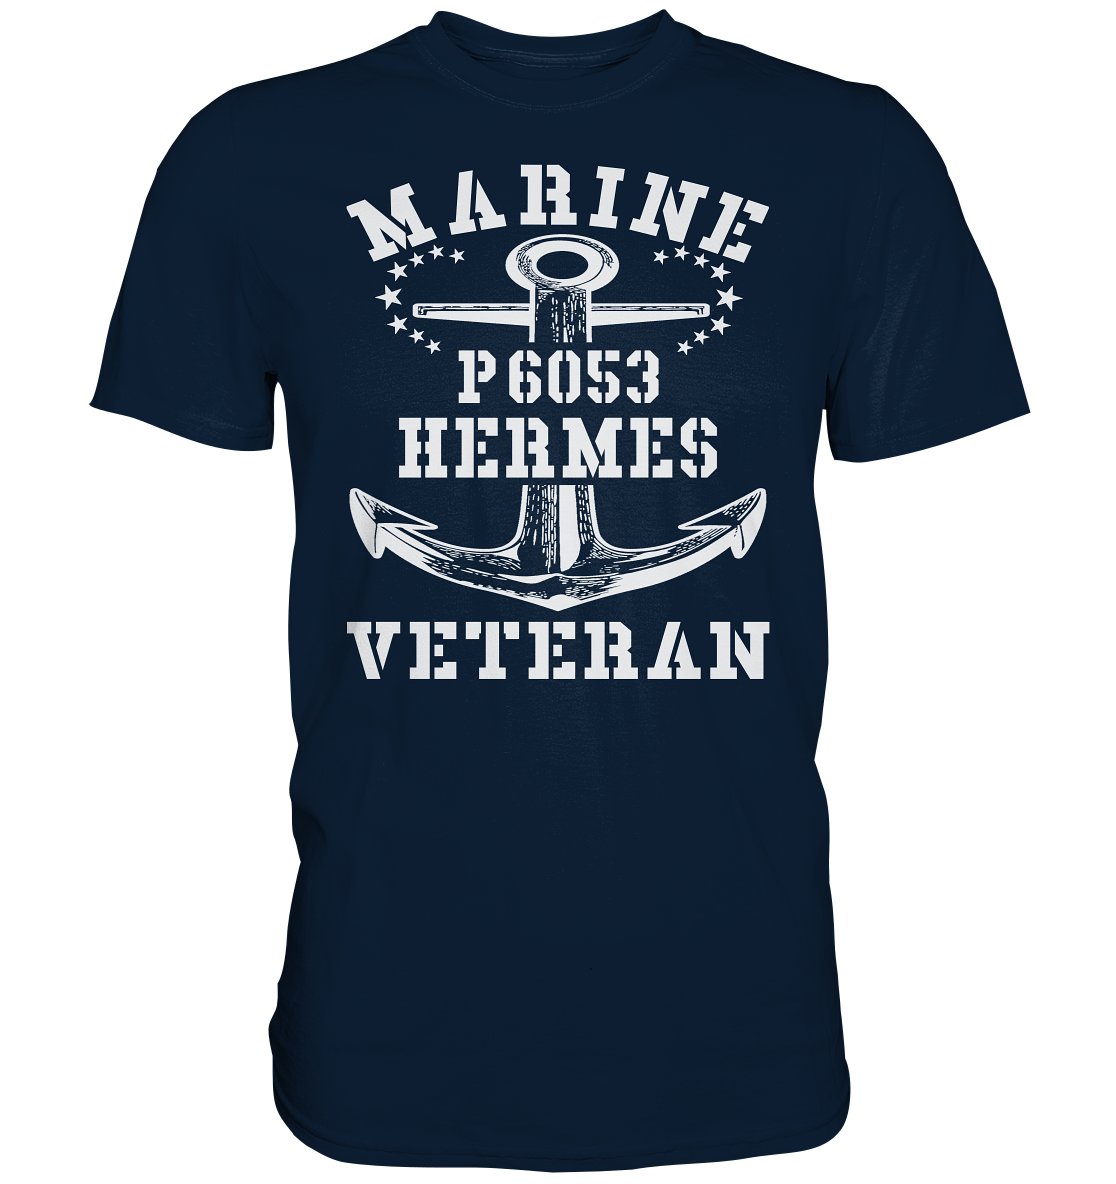 U-Jagdboot P6053 HERMES Marine Veteran - Premium Shirt